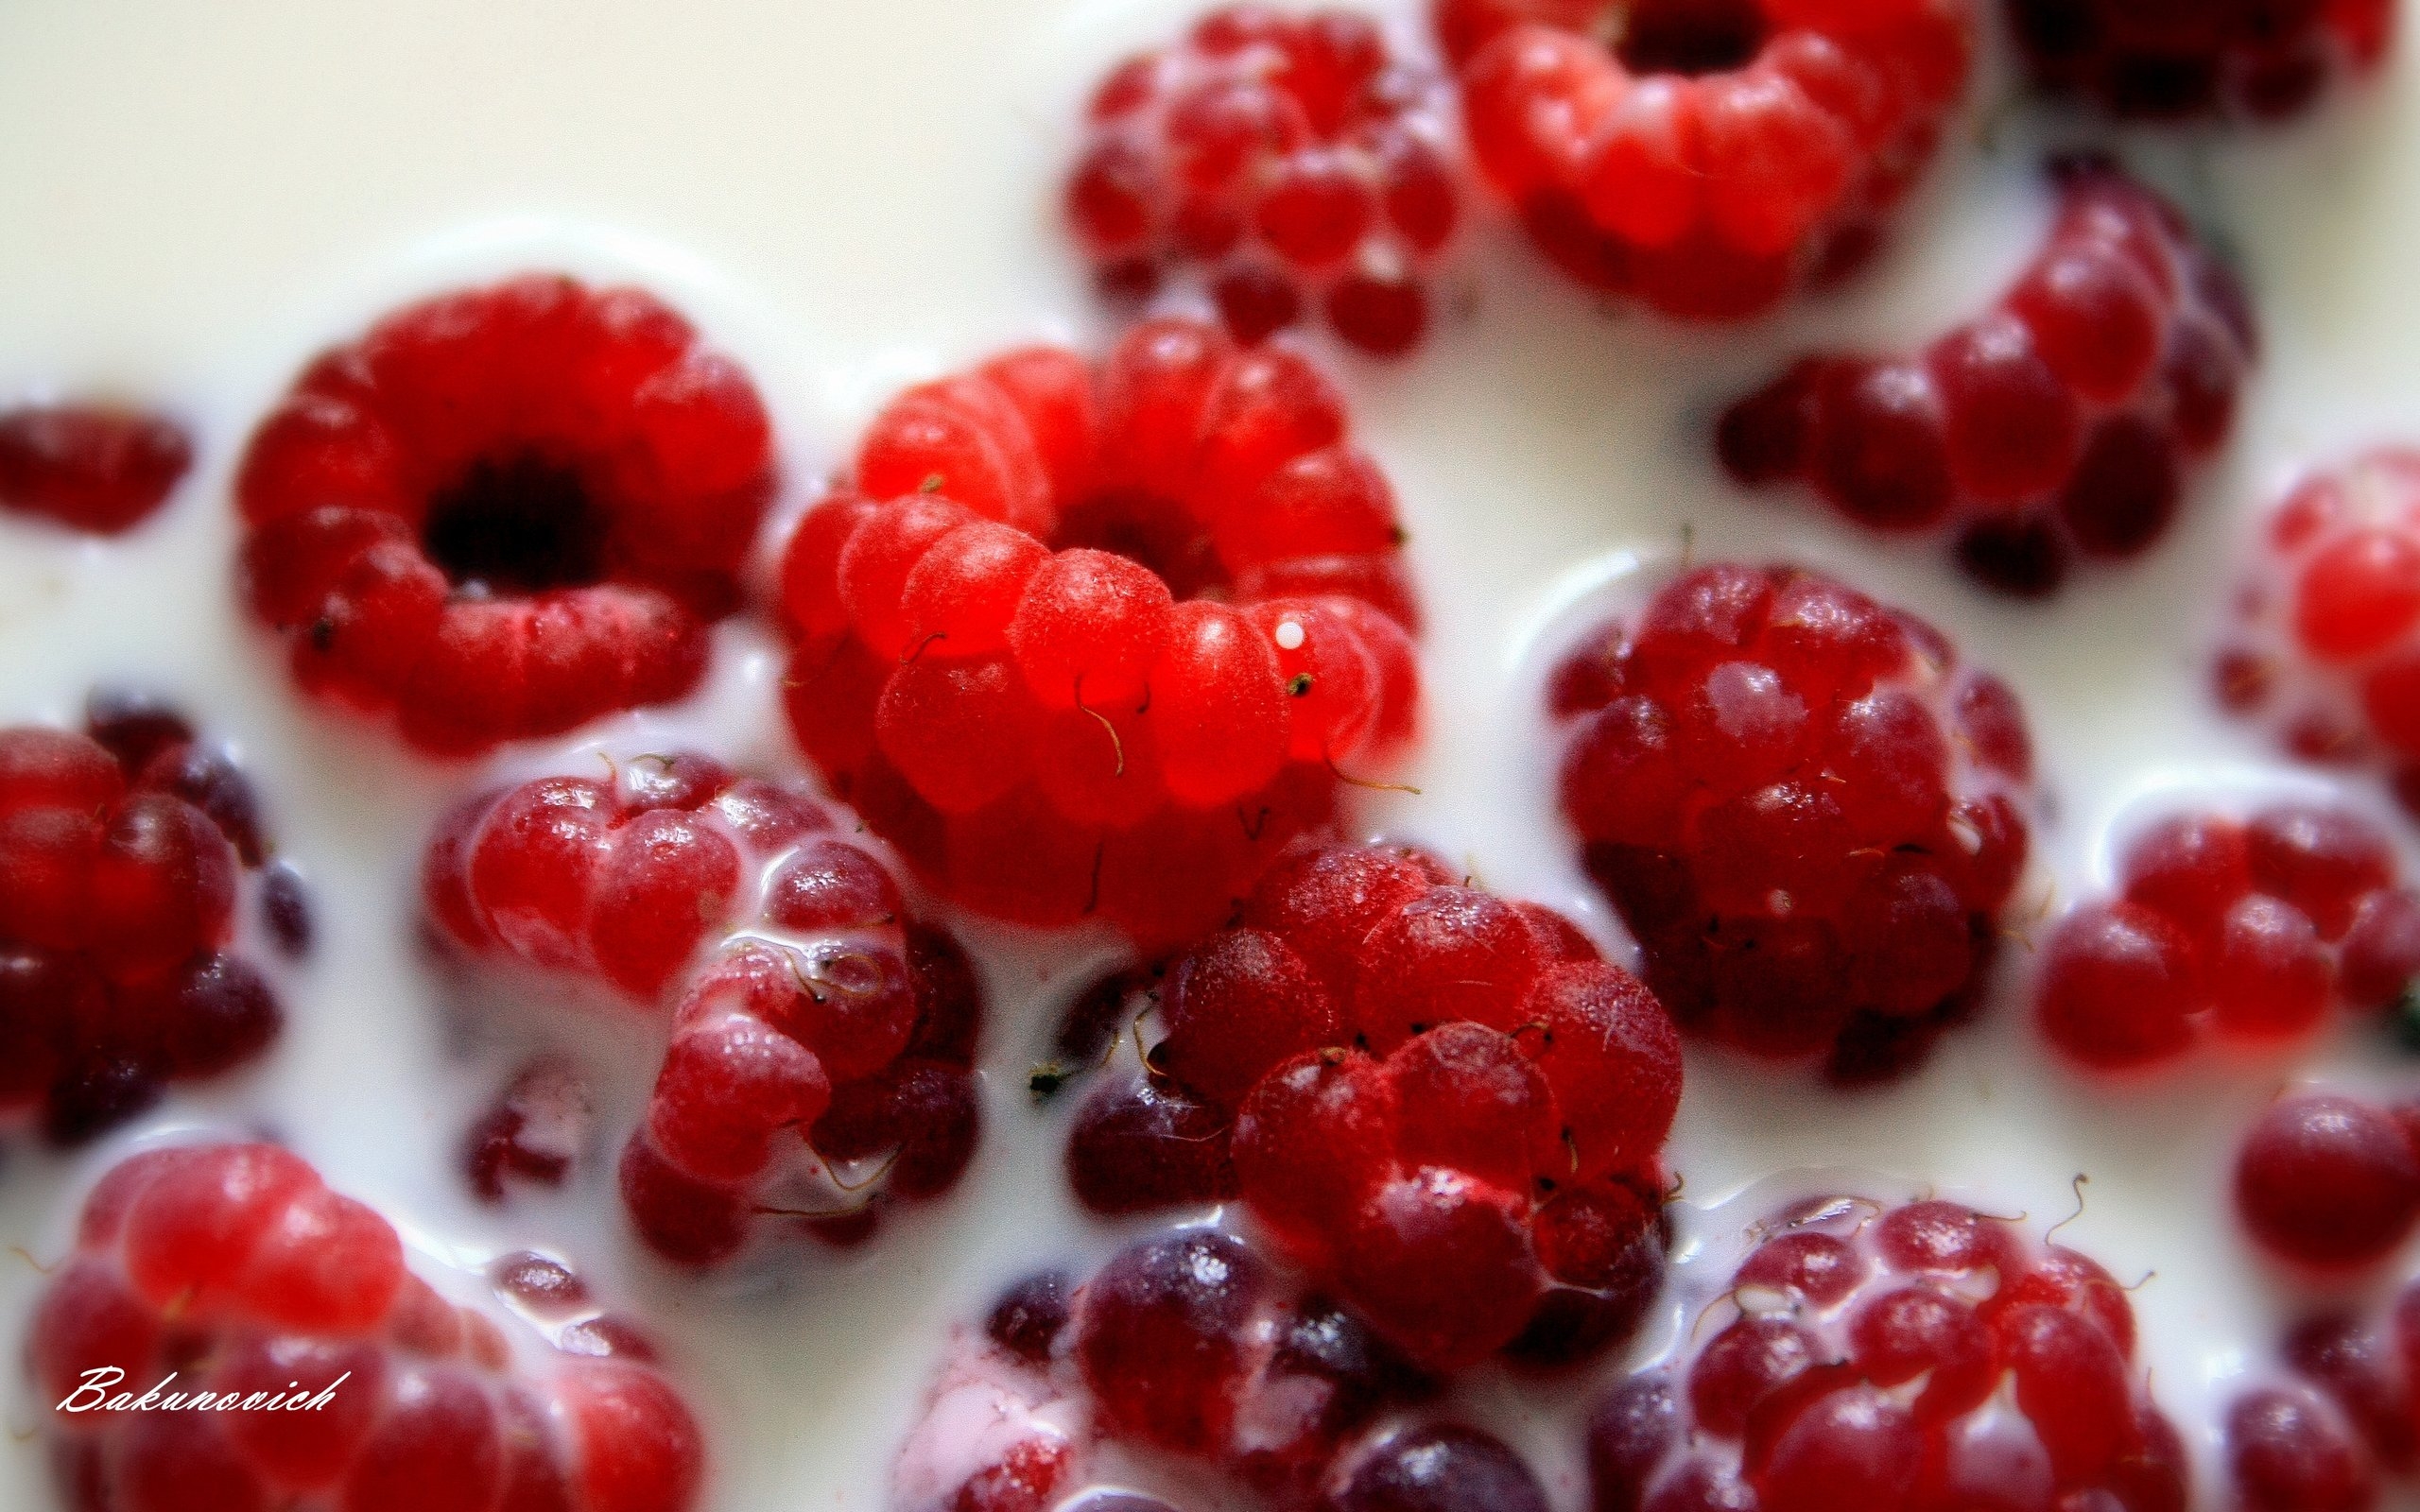 Raspberries in milk yogurt